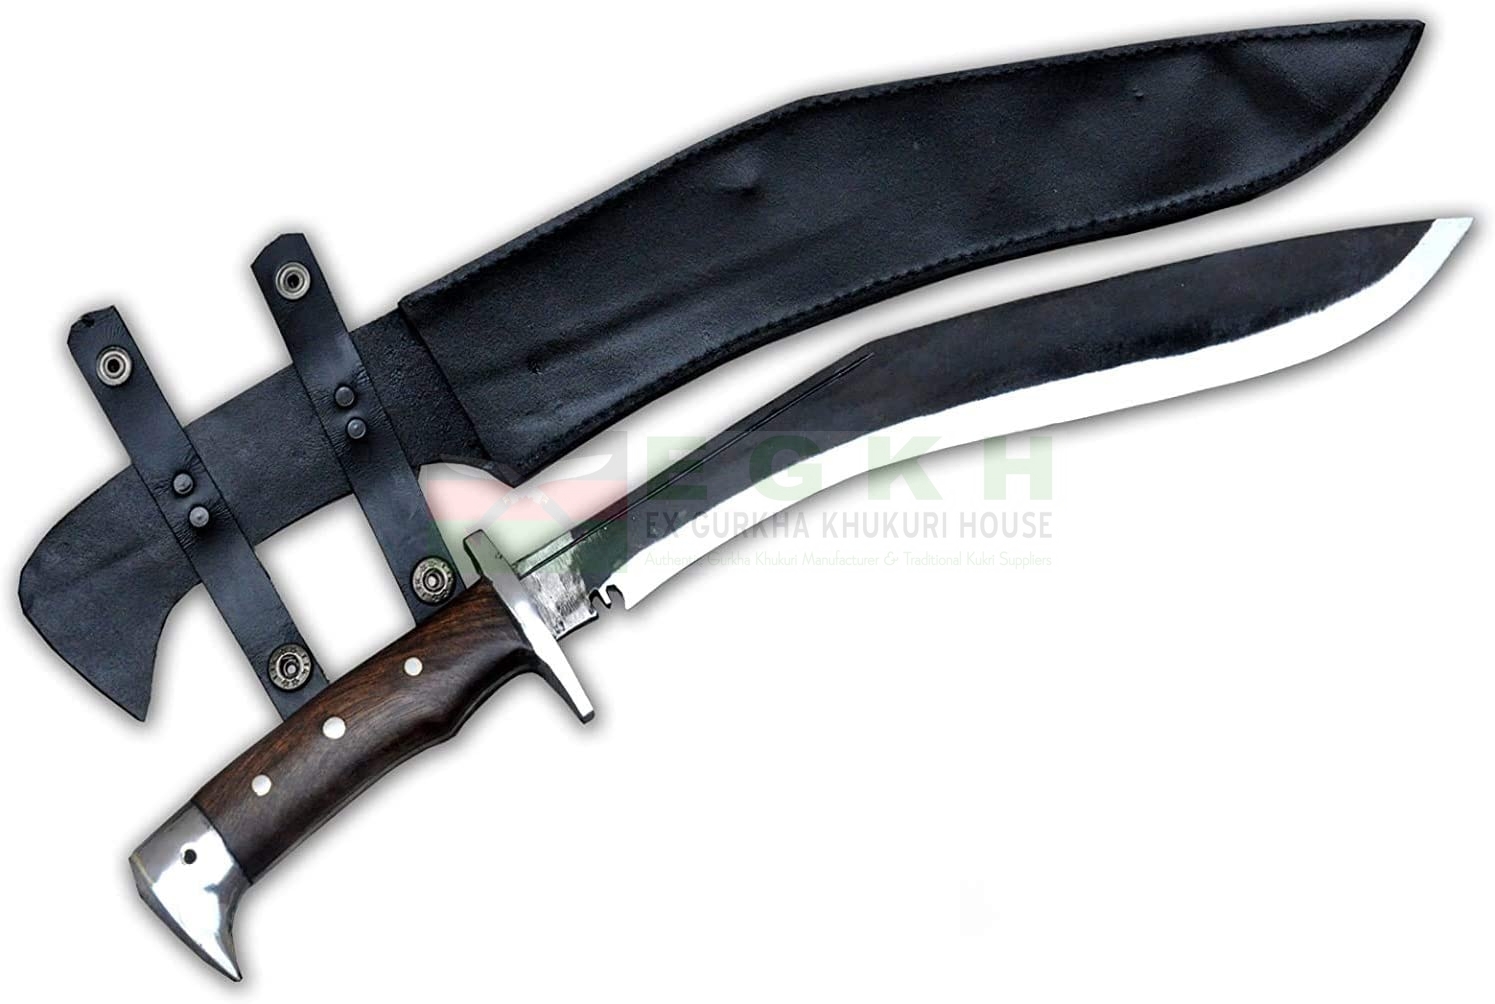 15-inch-Blade-sirupate-Eagle-Khukuri-Kukri-Handmade-Full-Tang-Guard-Handle-Kukri-Knife-from-Nepal-Factory-Outlet